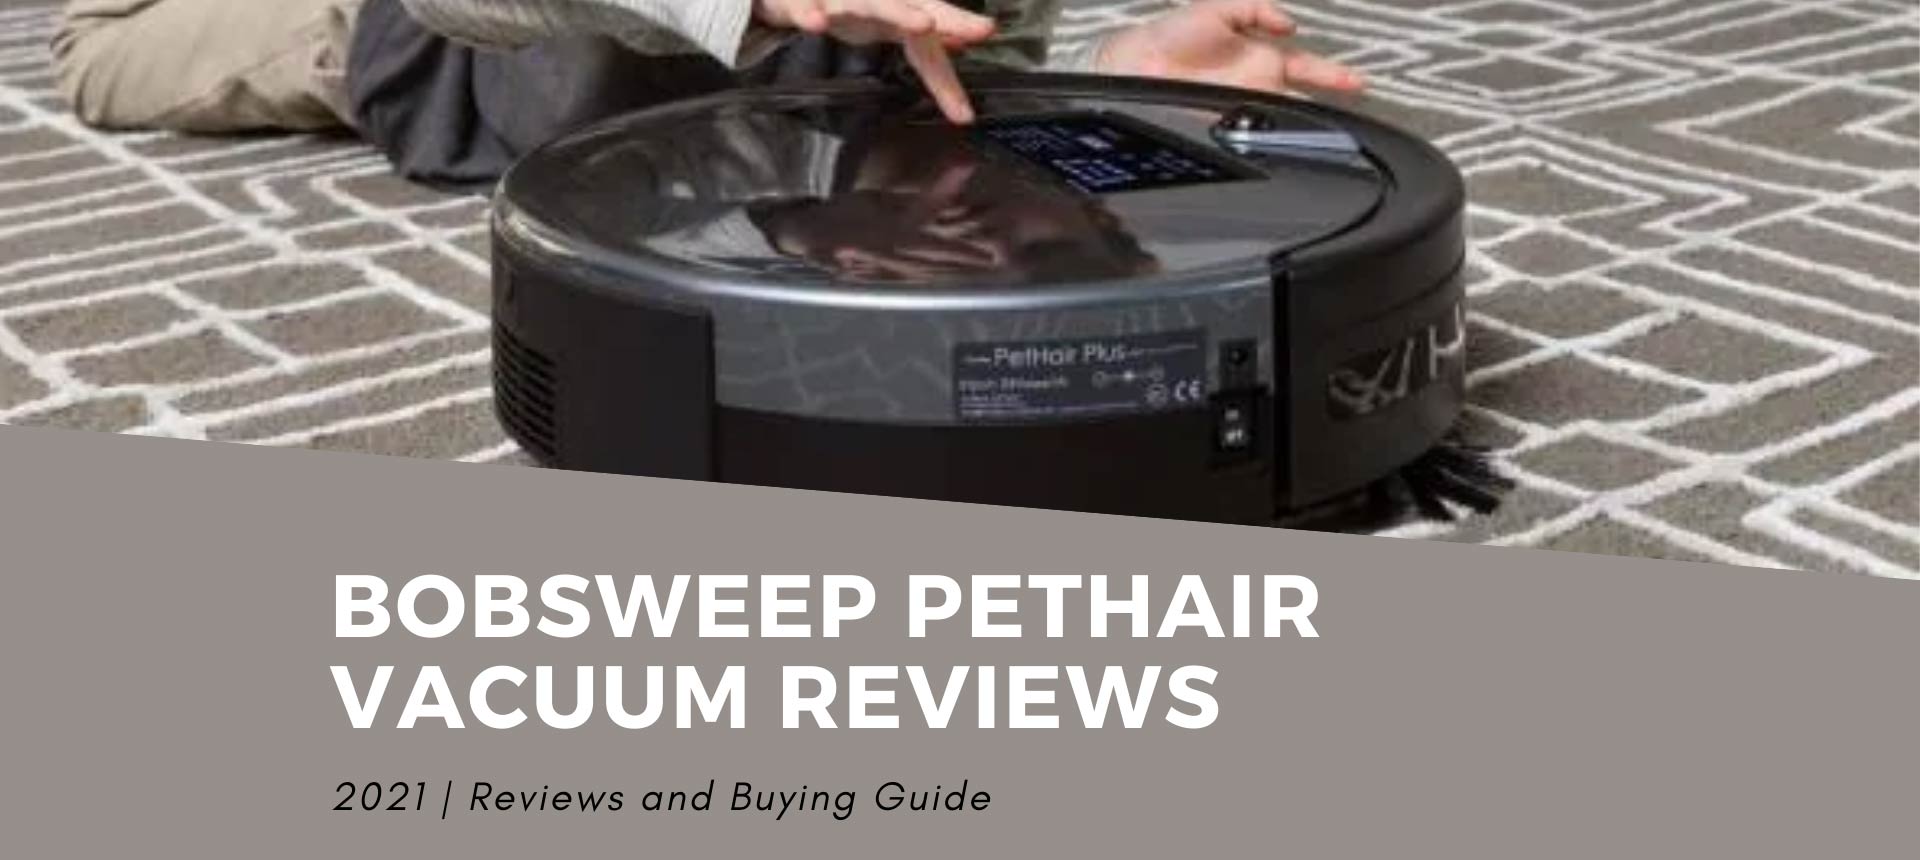 bObsweep PetHair Vacuum Reviews 2021: Pros & Cons